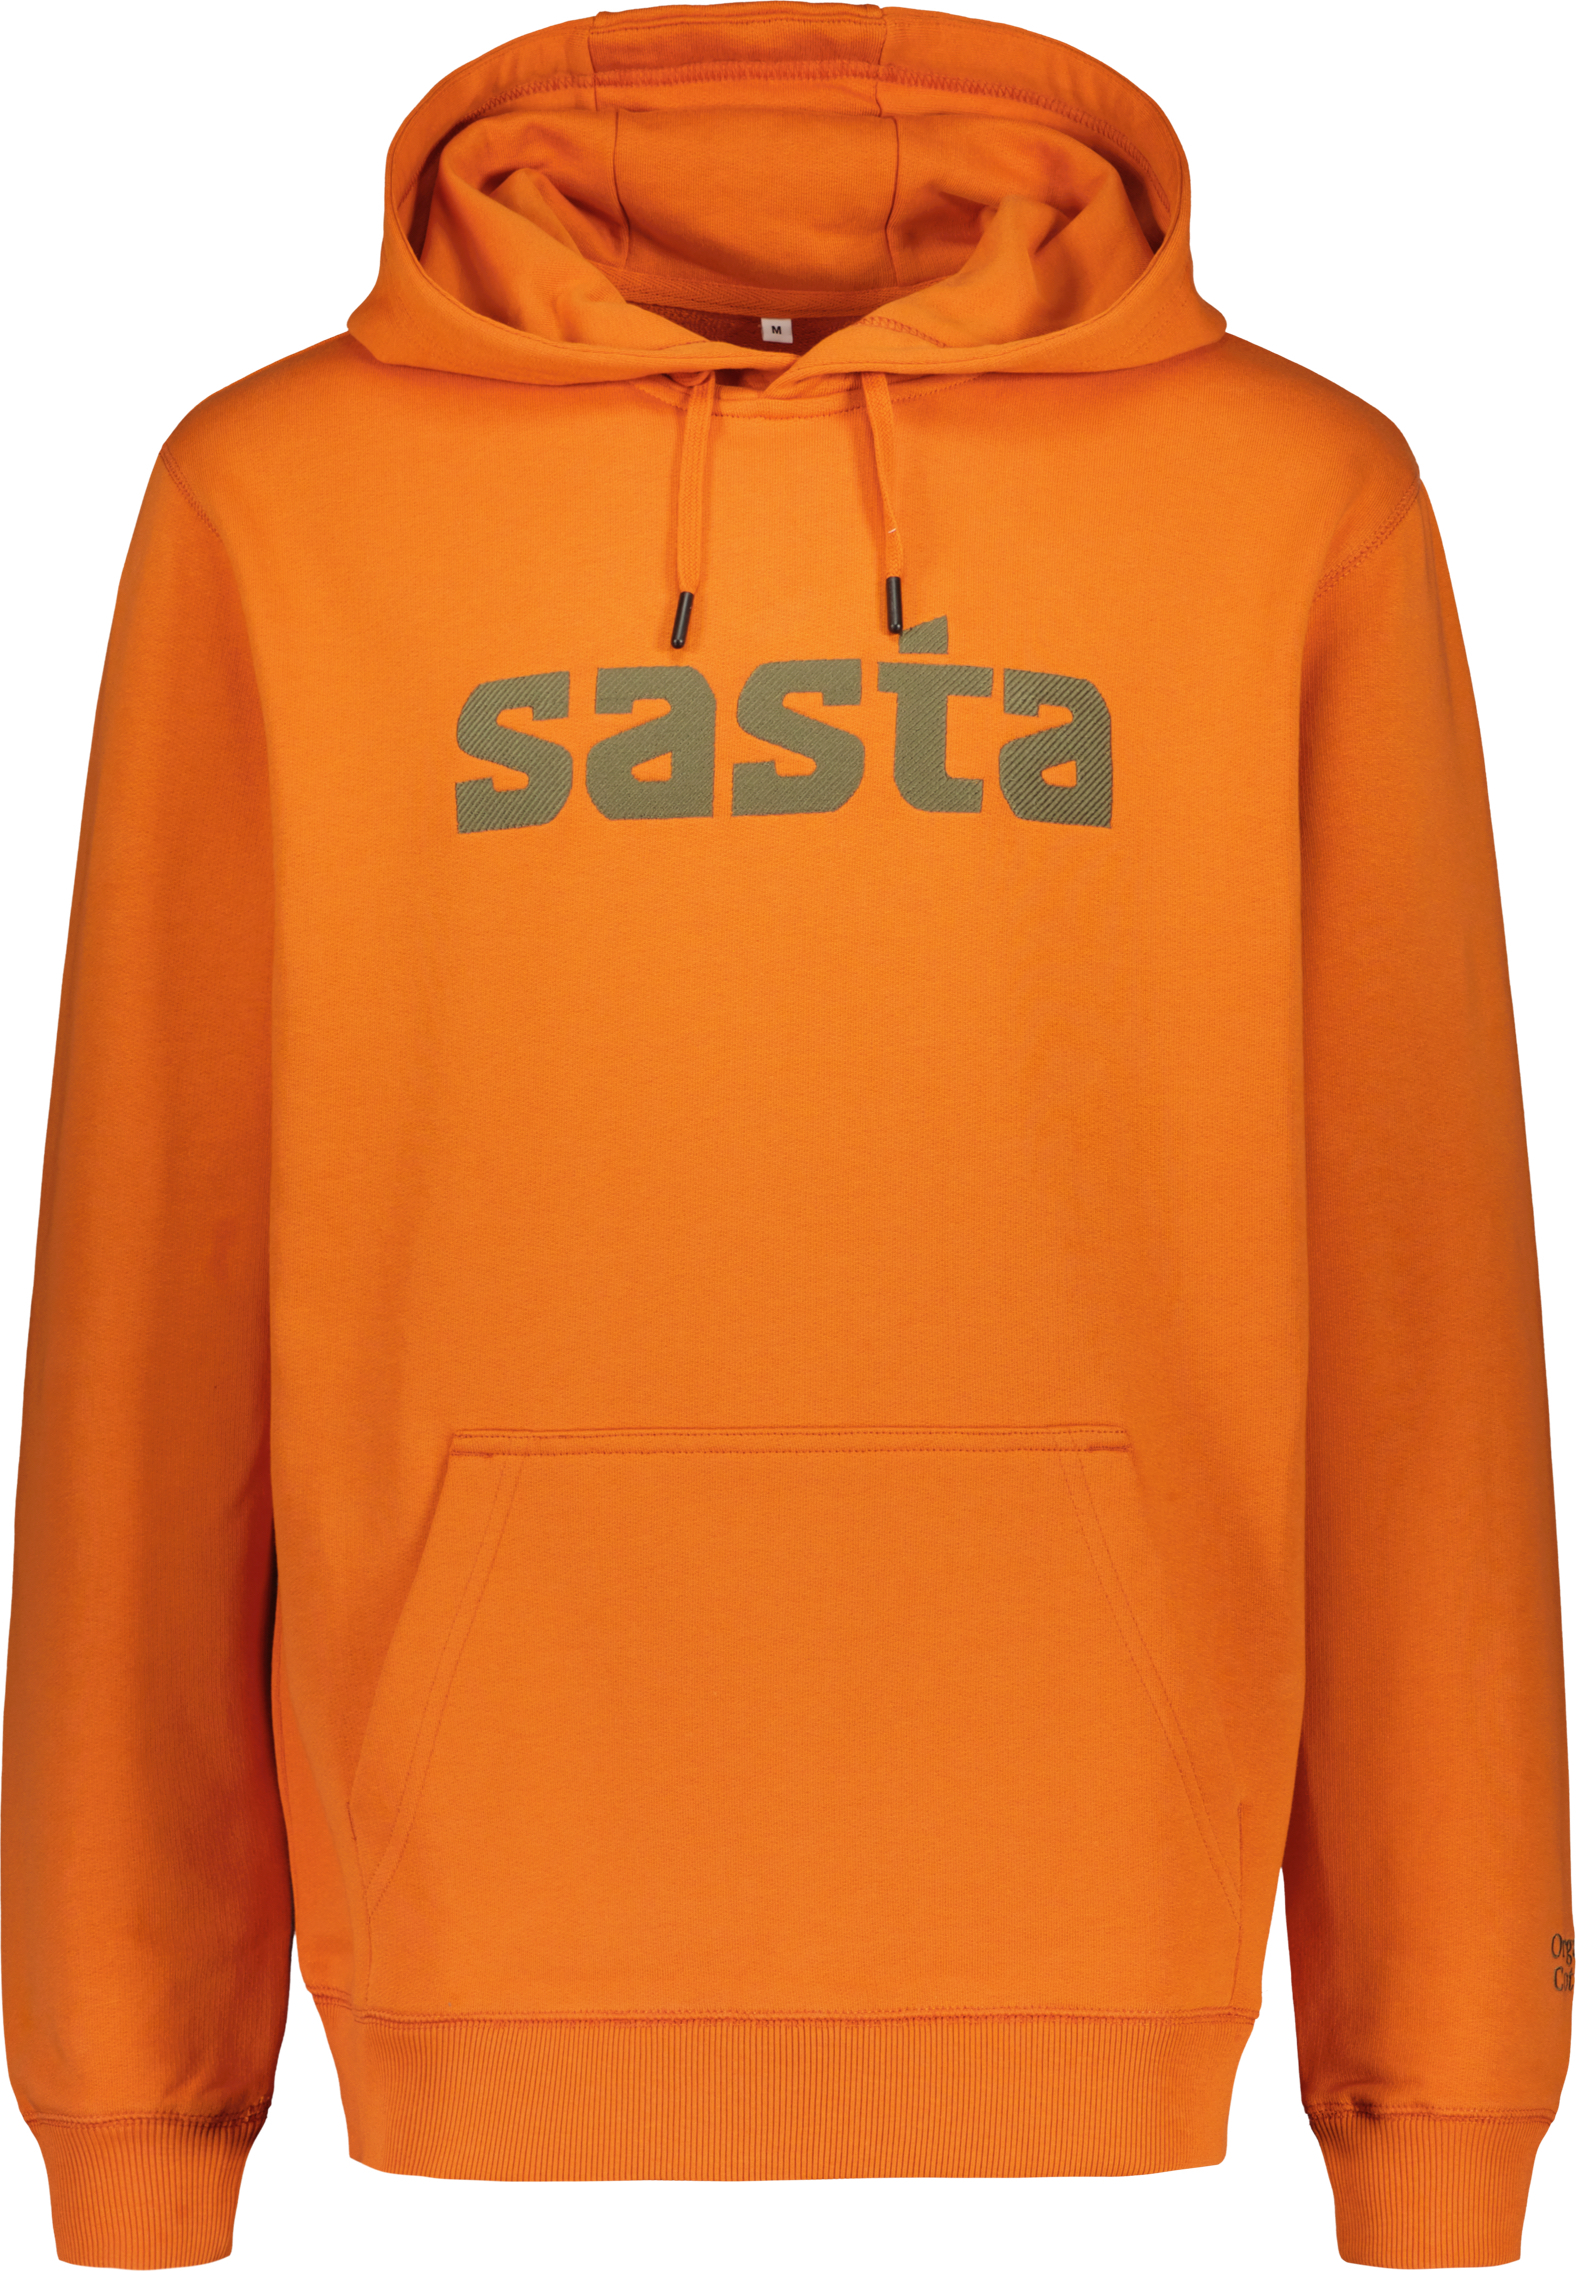 Unisex Sasta Hoodie Orange